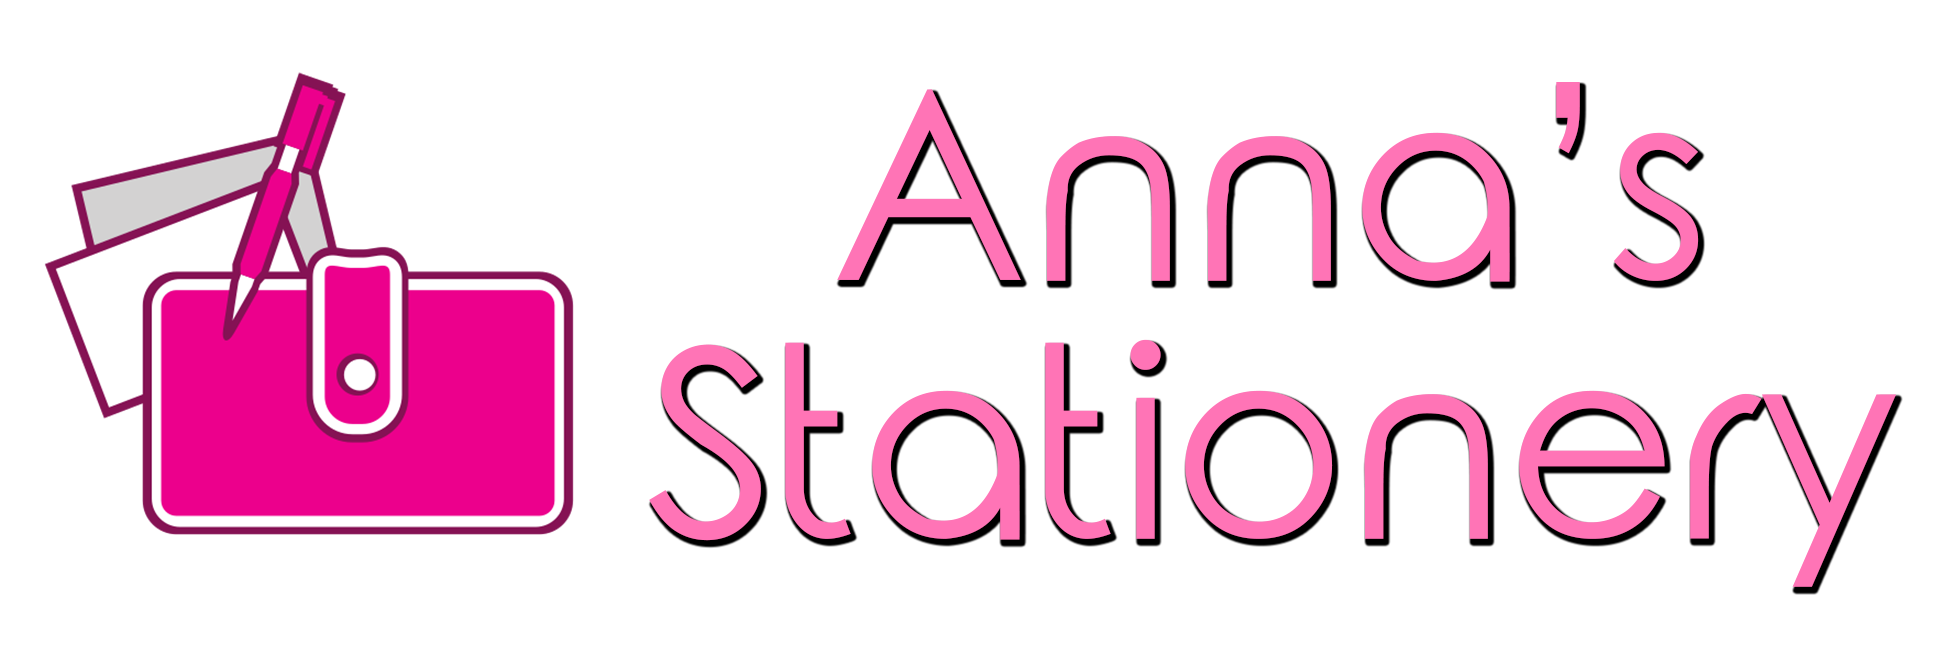 Anna's Stationery Website